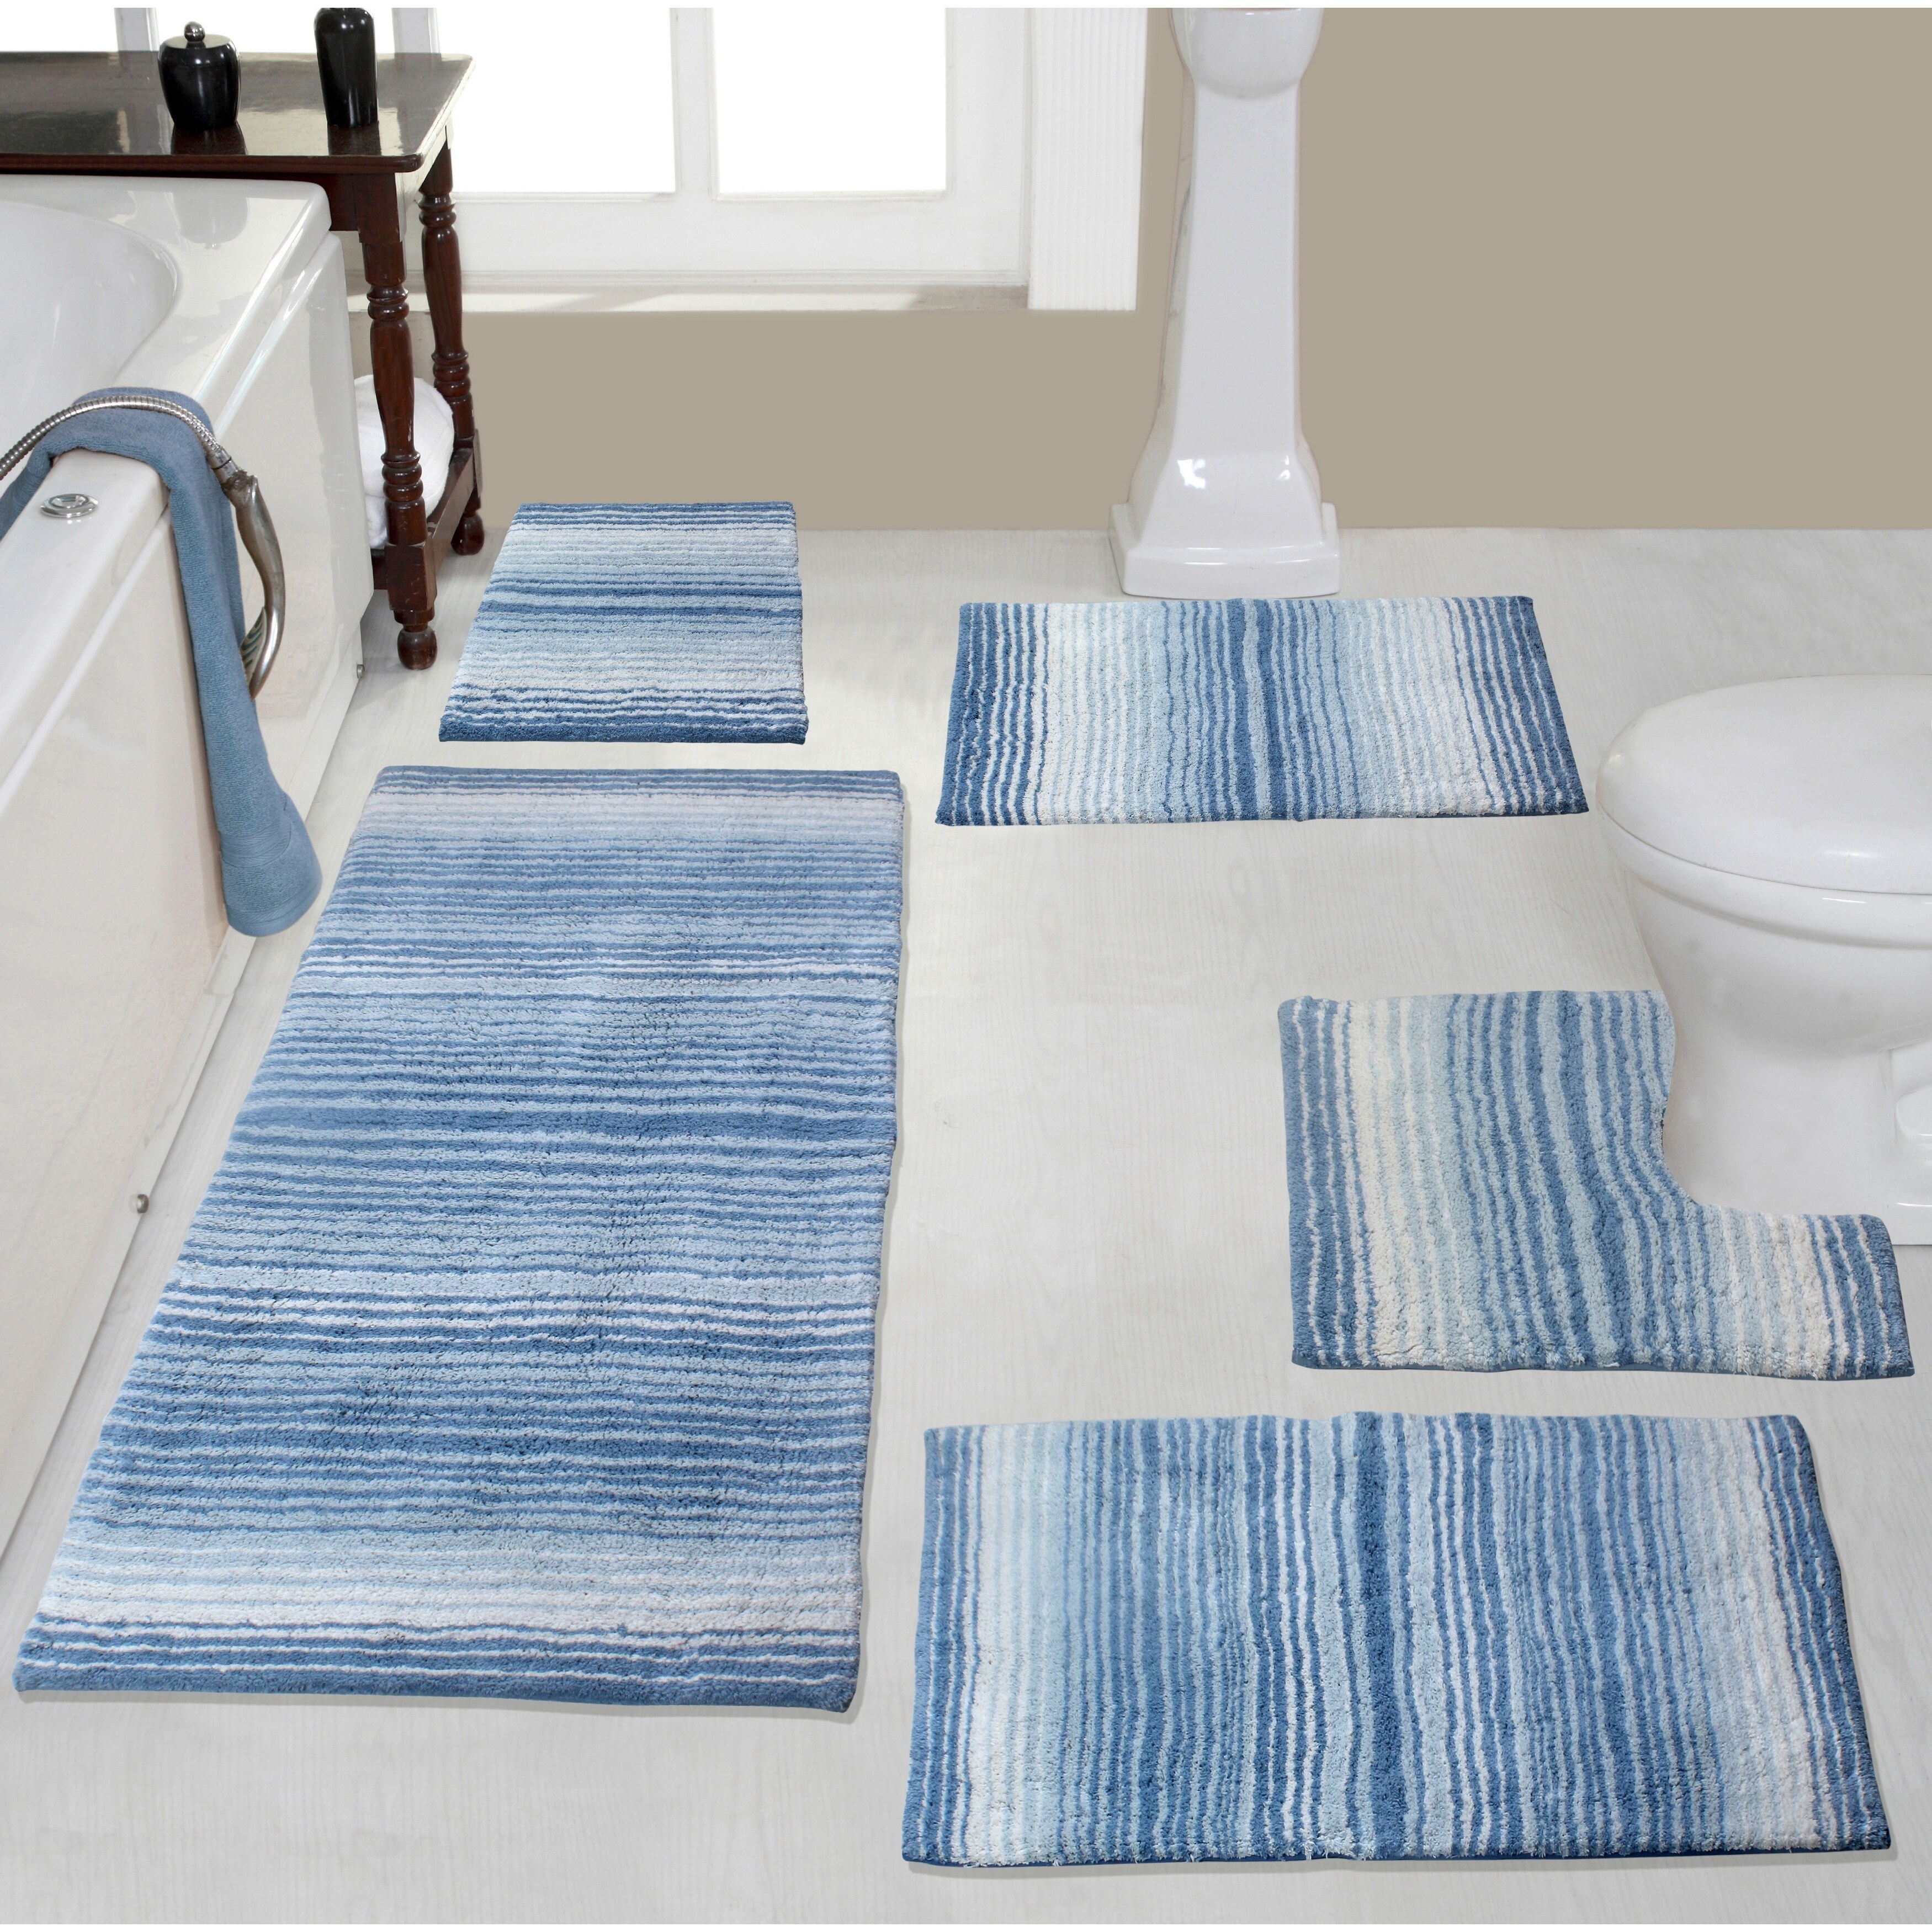 Non Slip Bath Mat Set 100% Cotton Bathroom Toilet Terry Towel Soft Pack of 5 